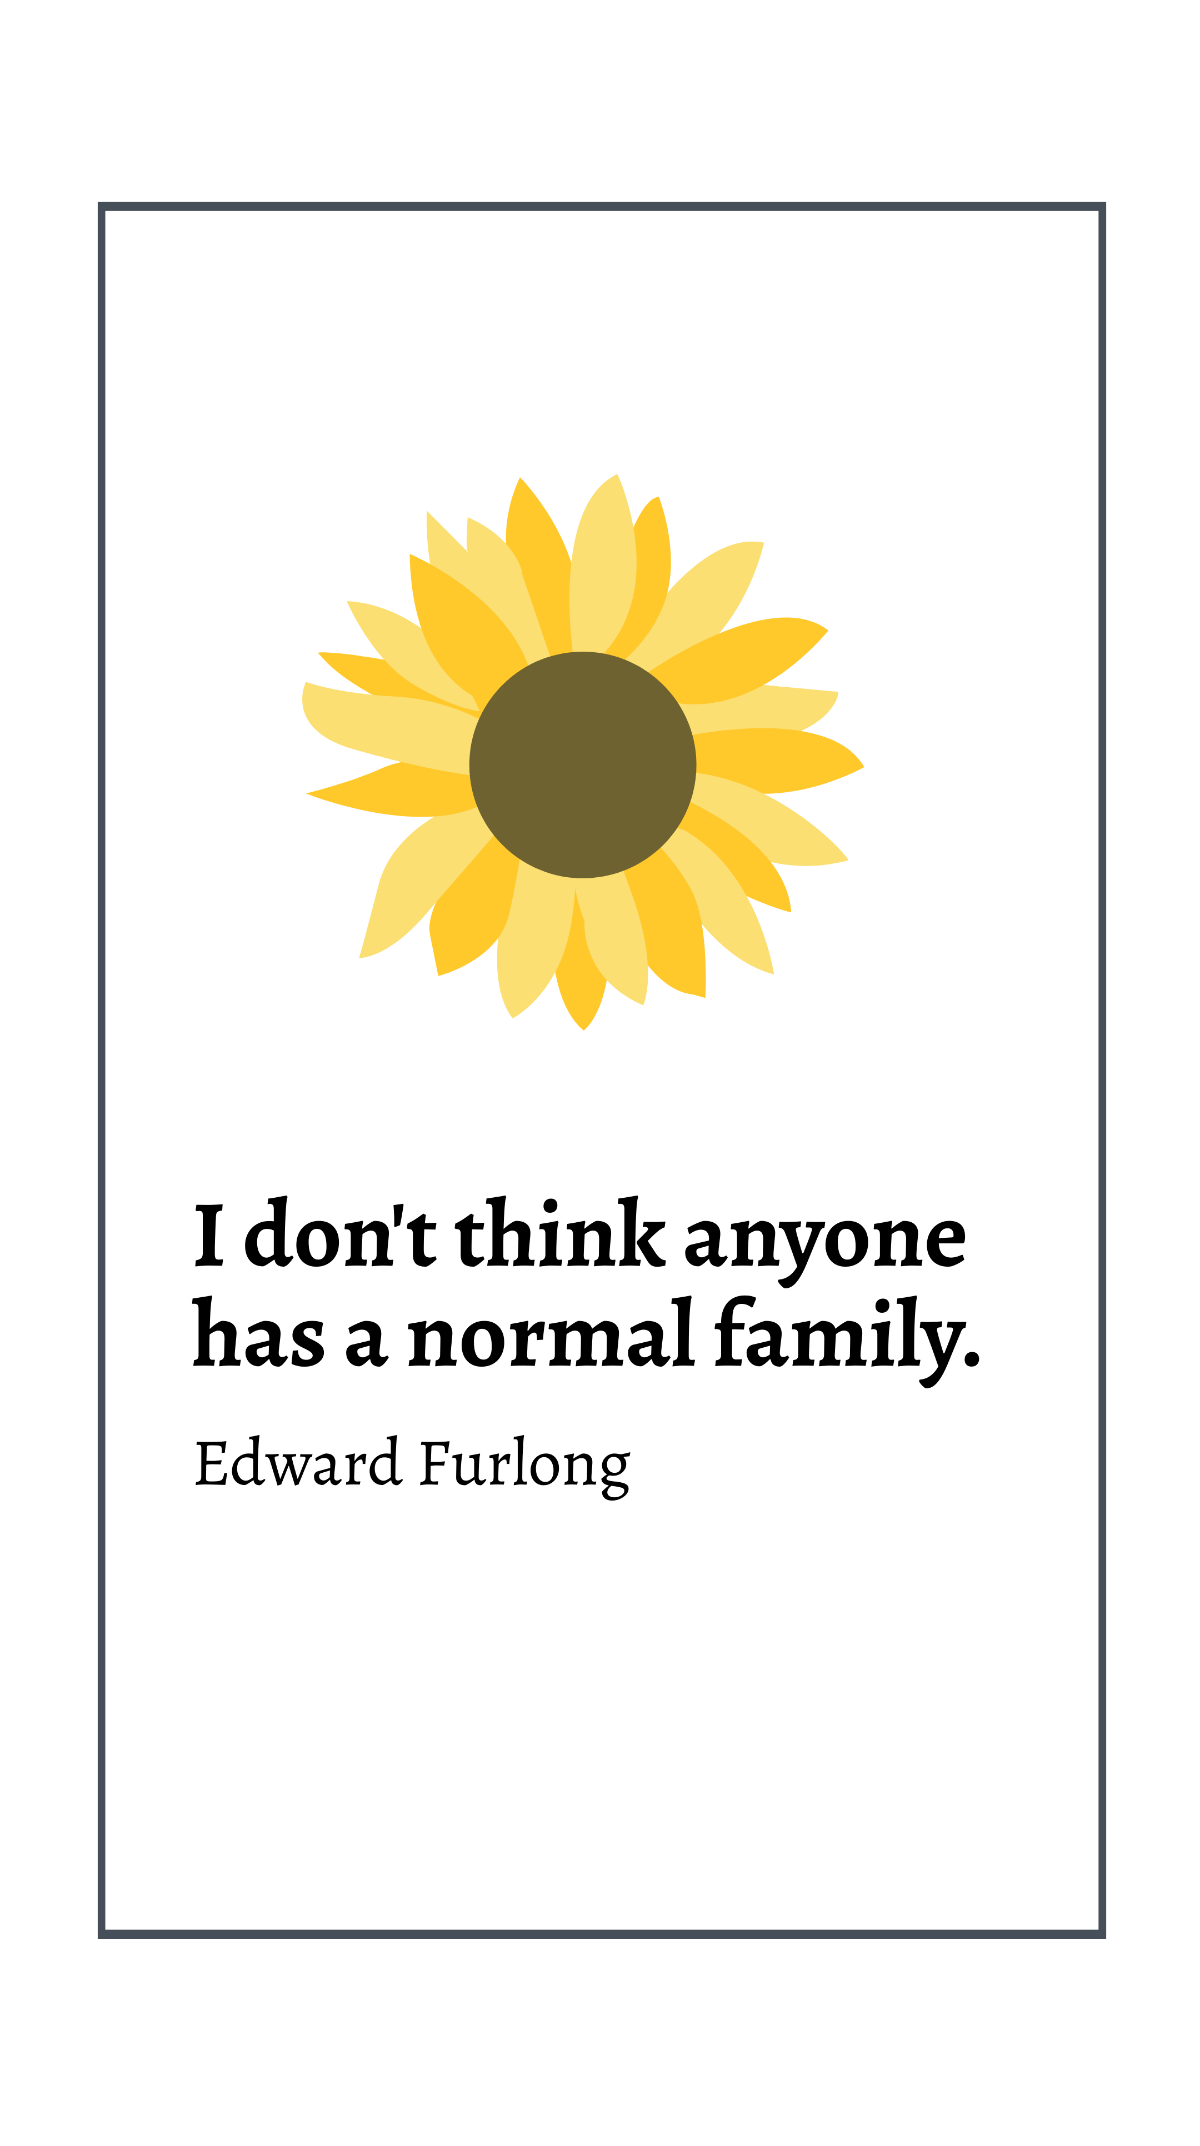 Edward Furlong - I don't think anyone has a normal family. Template